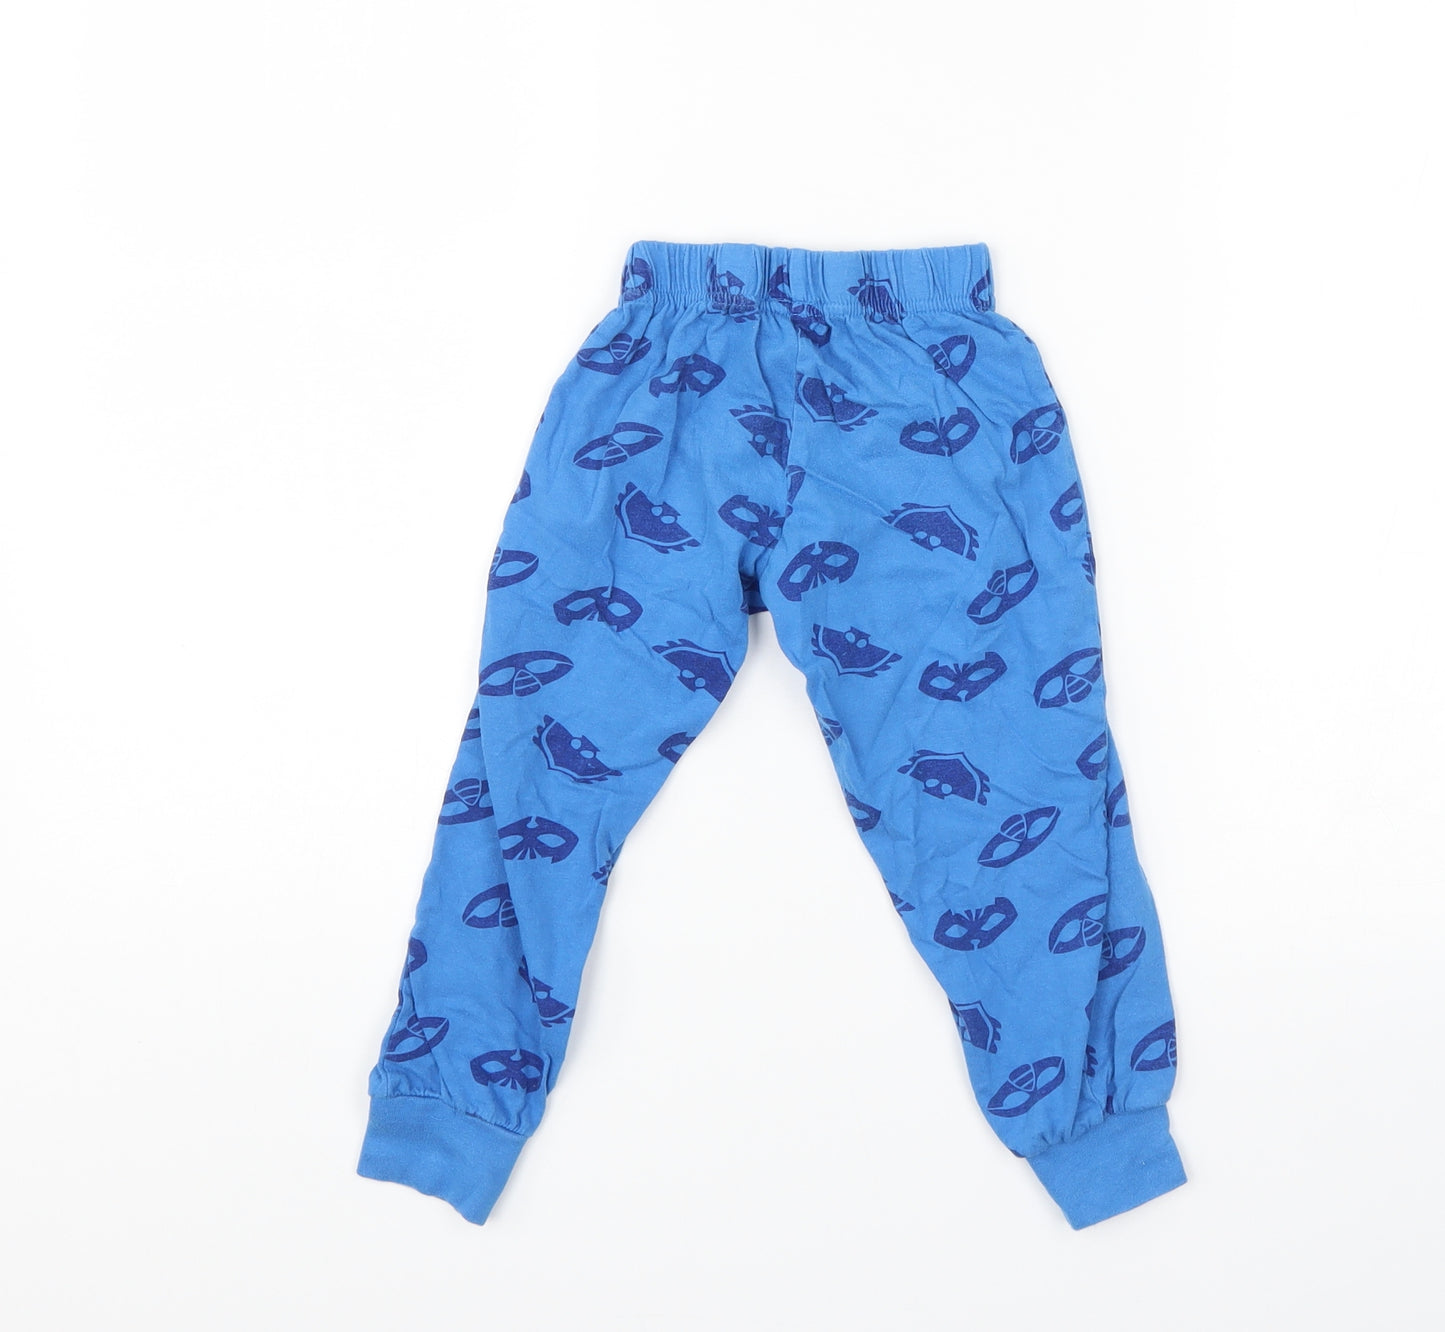 Preworn Boys Blue    Pyjama Pants Size 3-4 Years